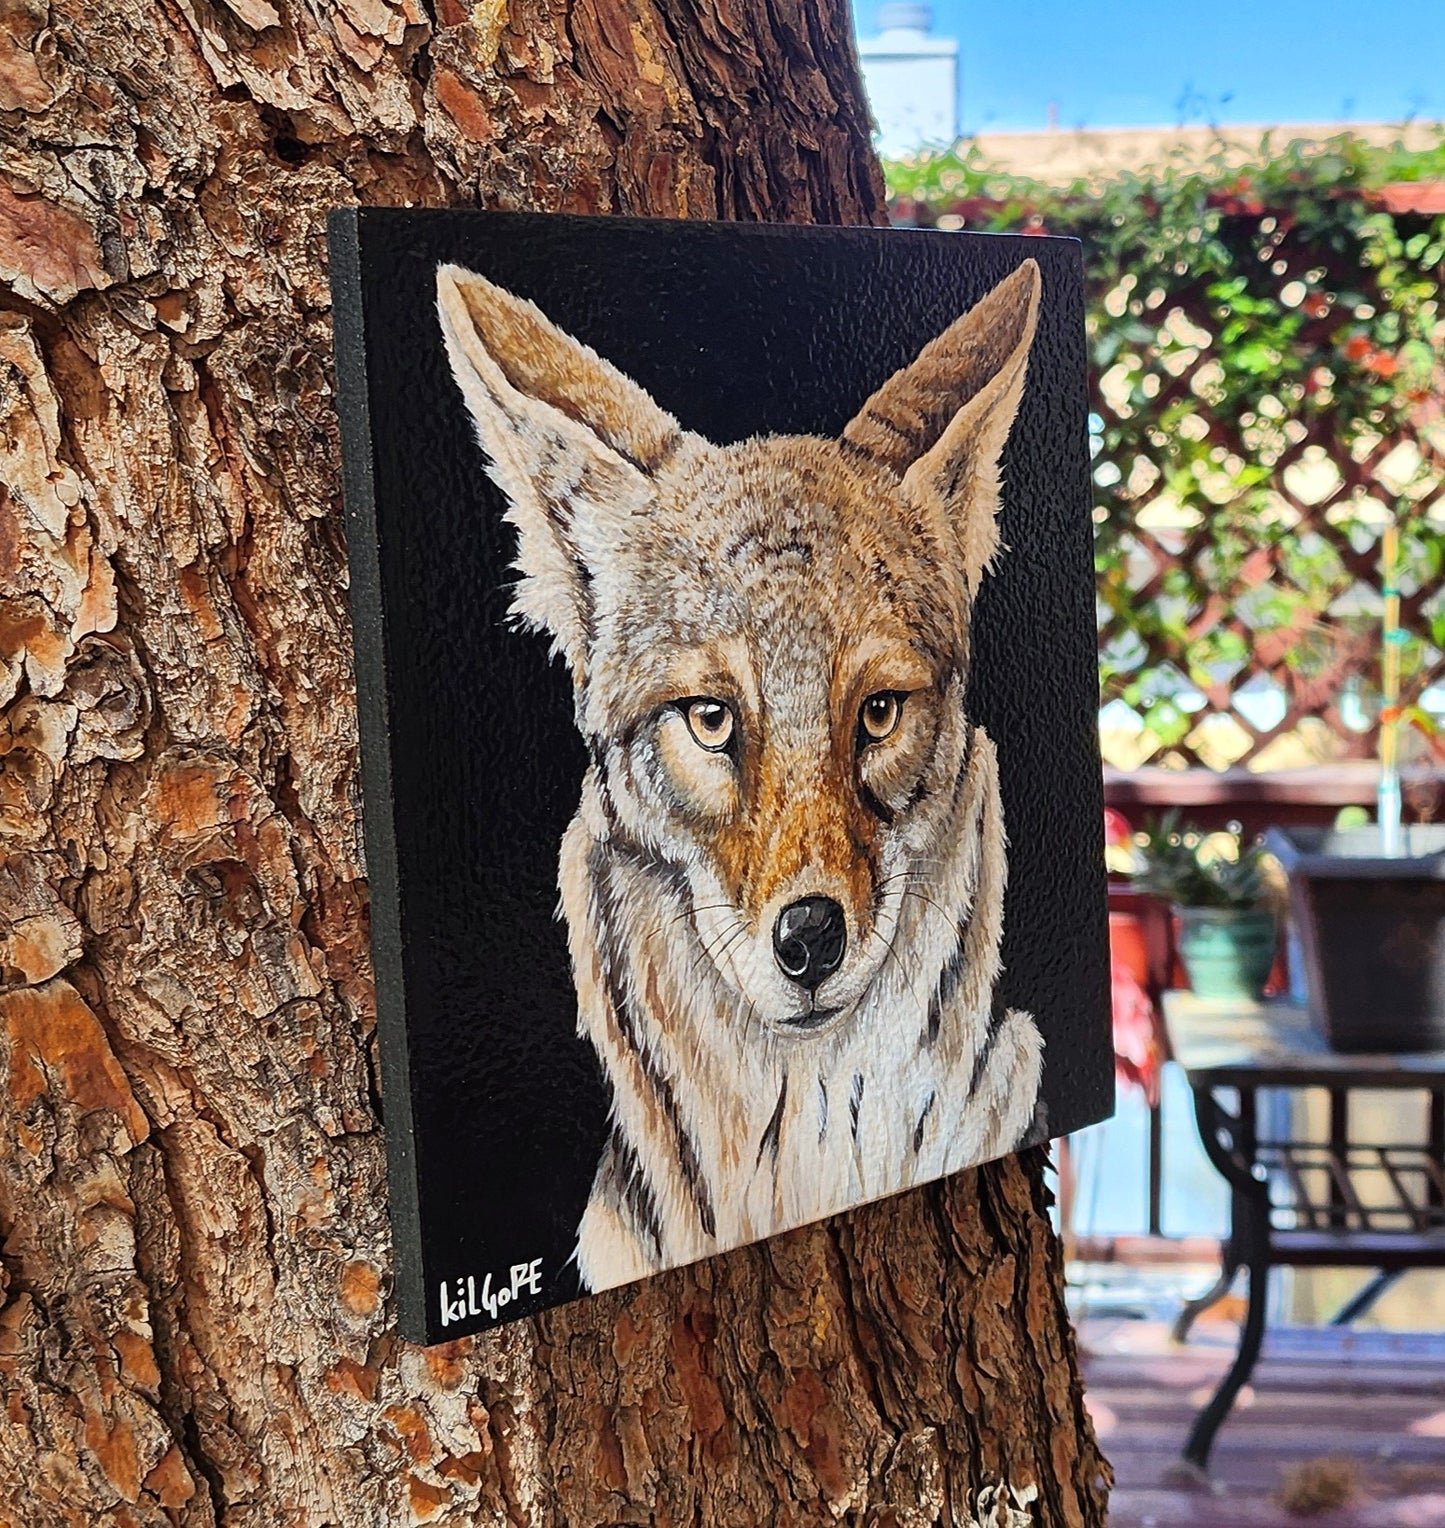 Coyote - Original Acrylic Painting - By Kilgore, Original 7" x 7" Acrylic Painting on Wood